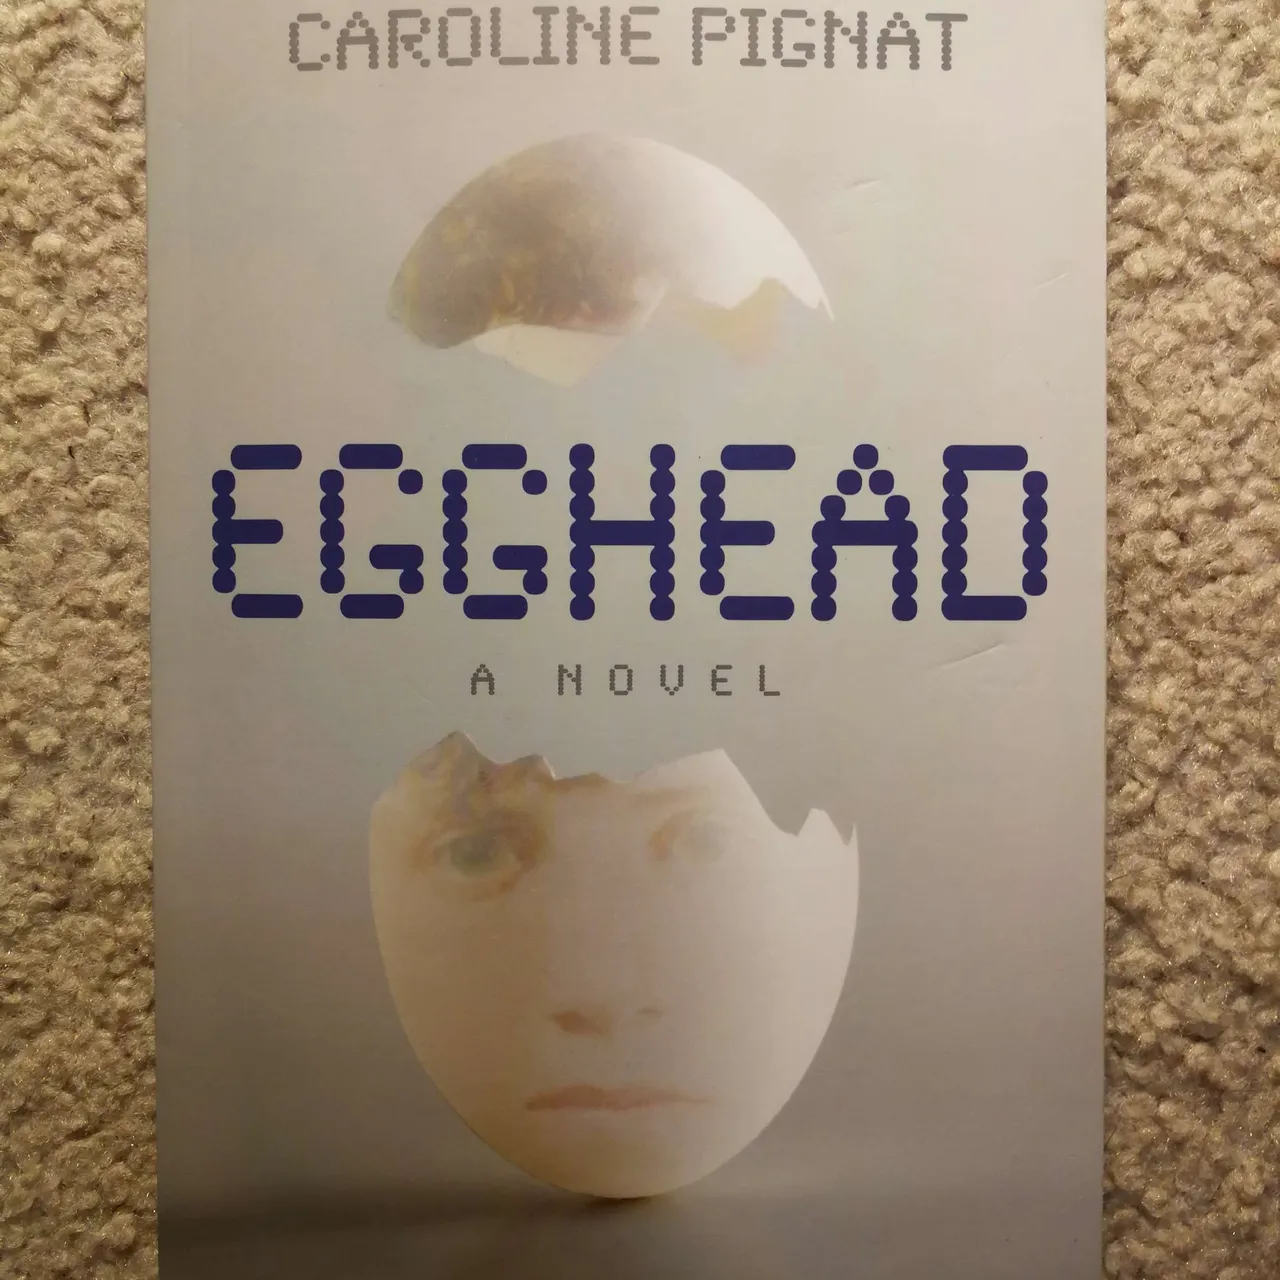 Egghead a Novel, book by Caroline Pignat photo 1